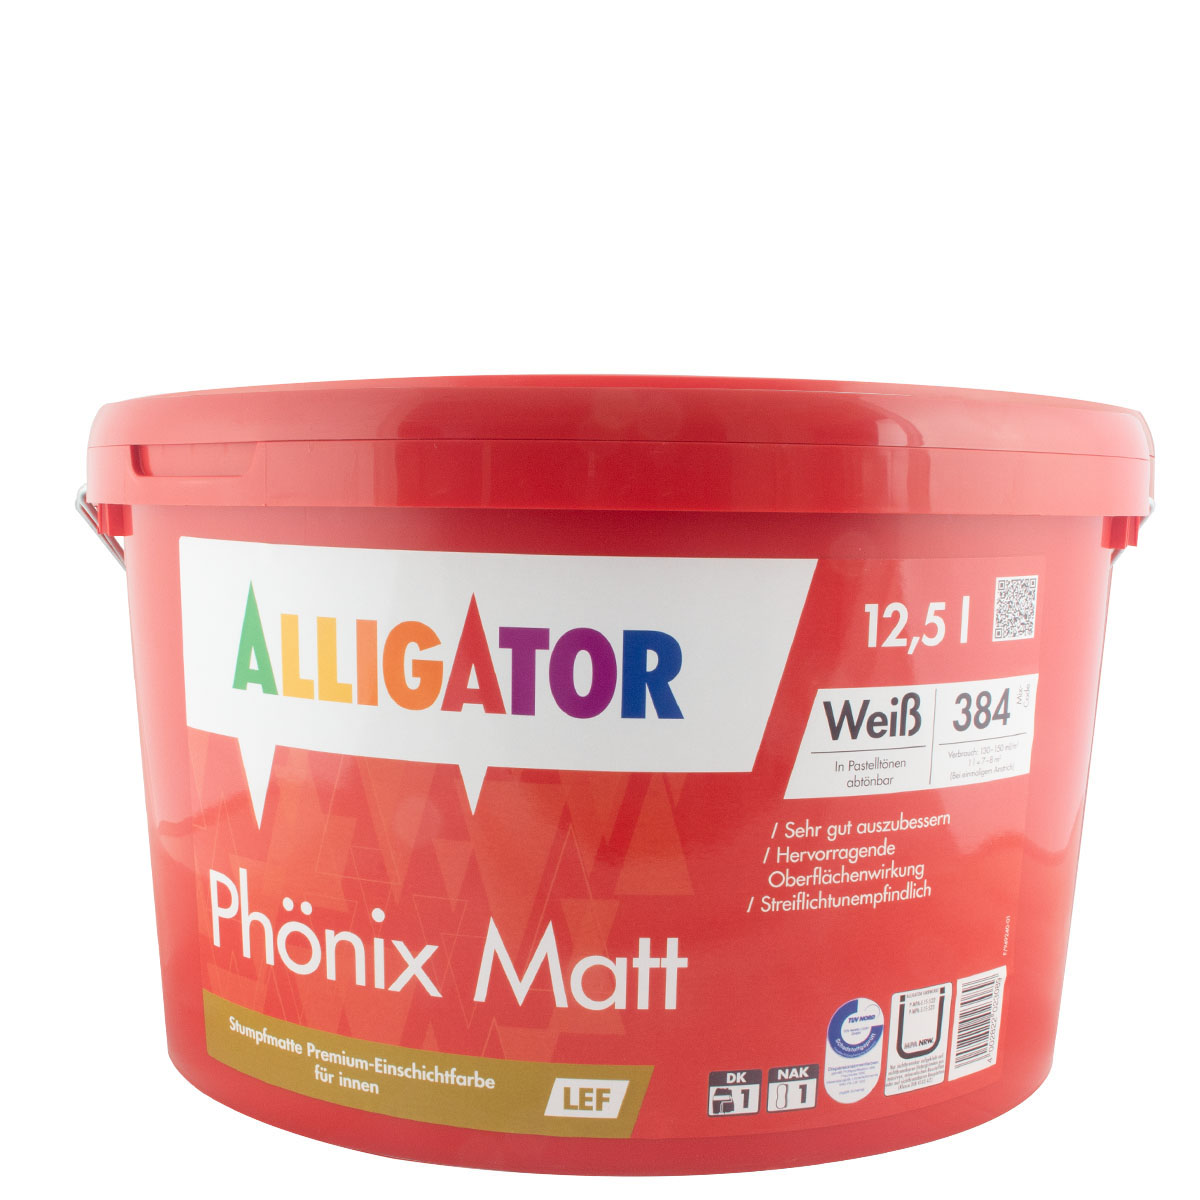 Alligator Phönix Matt LEF 12,5L weiß, hochdeckende Wandfarbe, Dispersionsfarbe